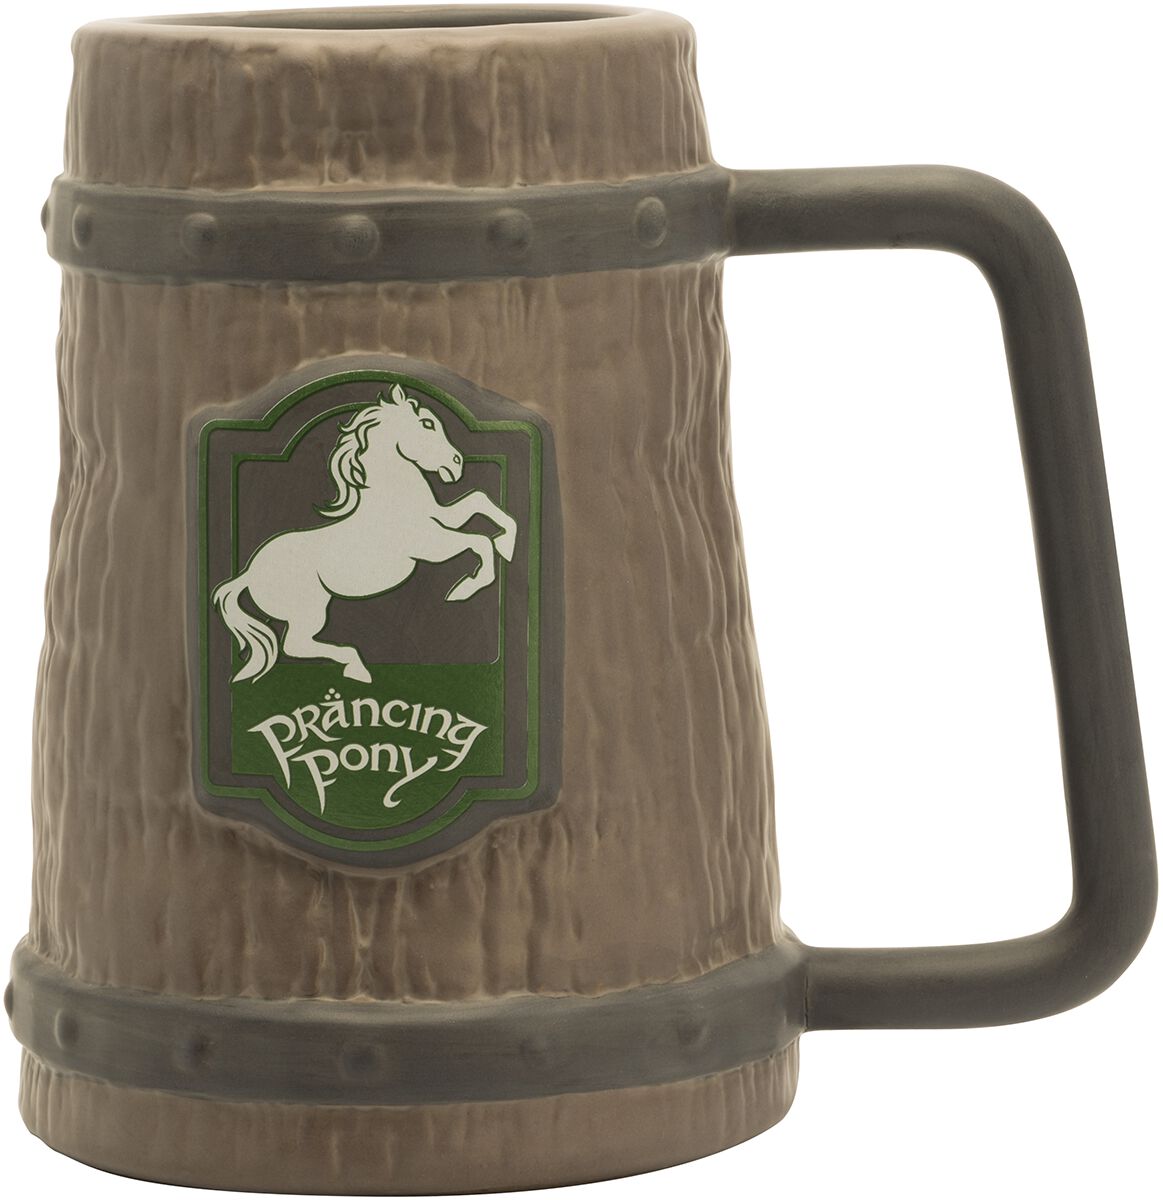 The Lord Of The Rings Prancing Pony 3D Beer Jug brown